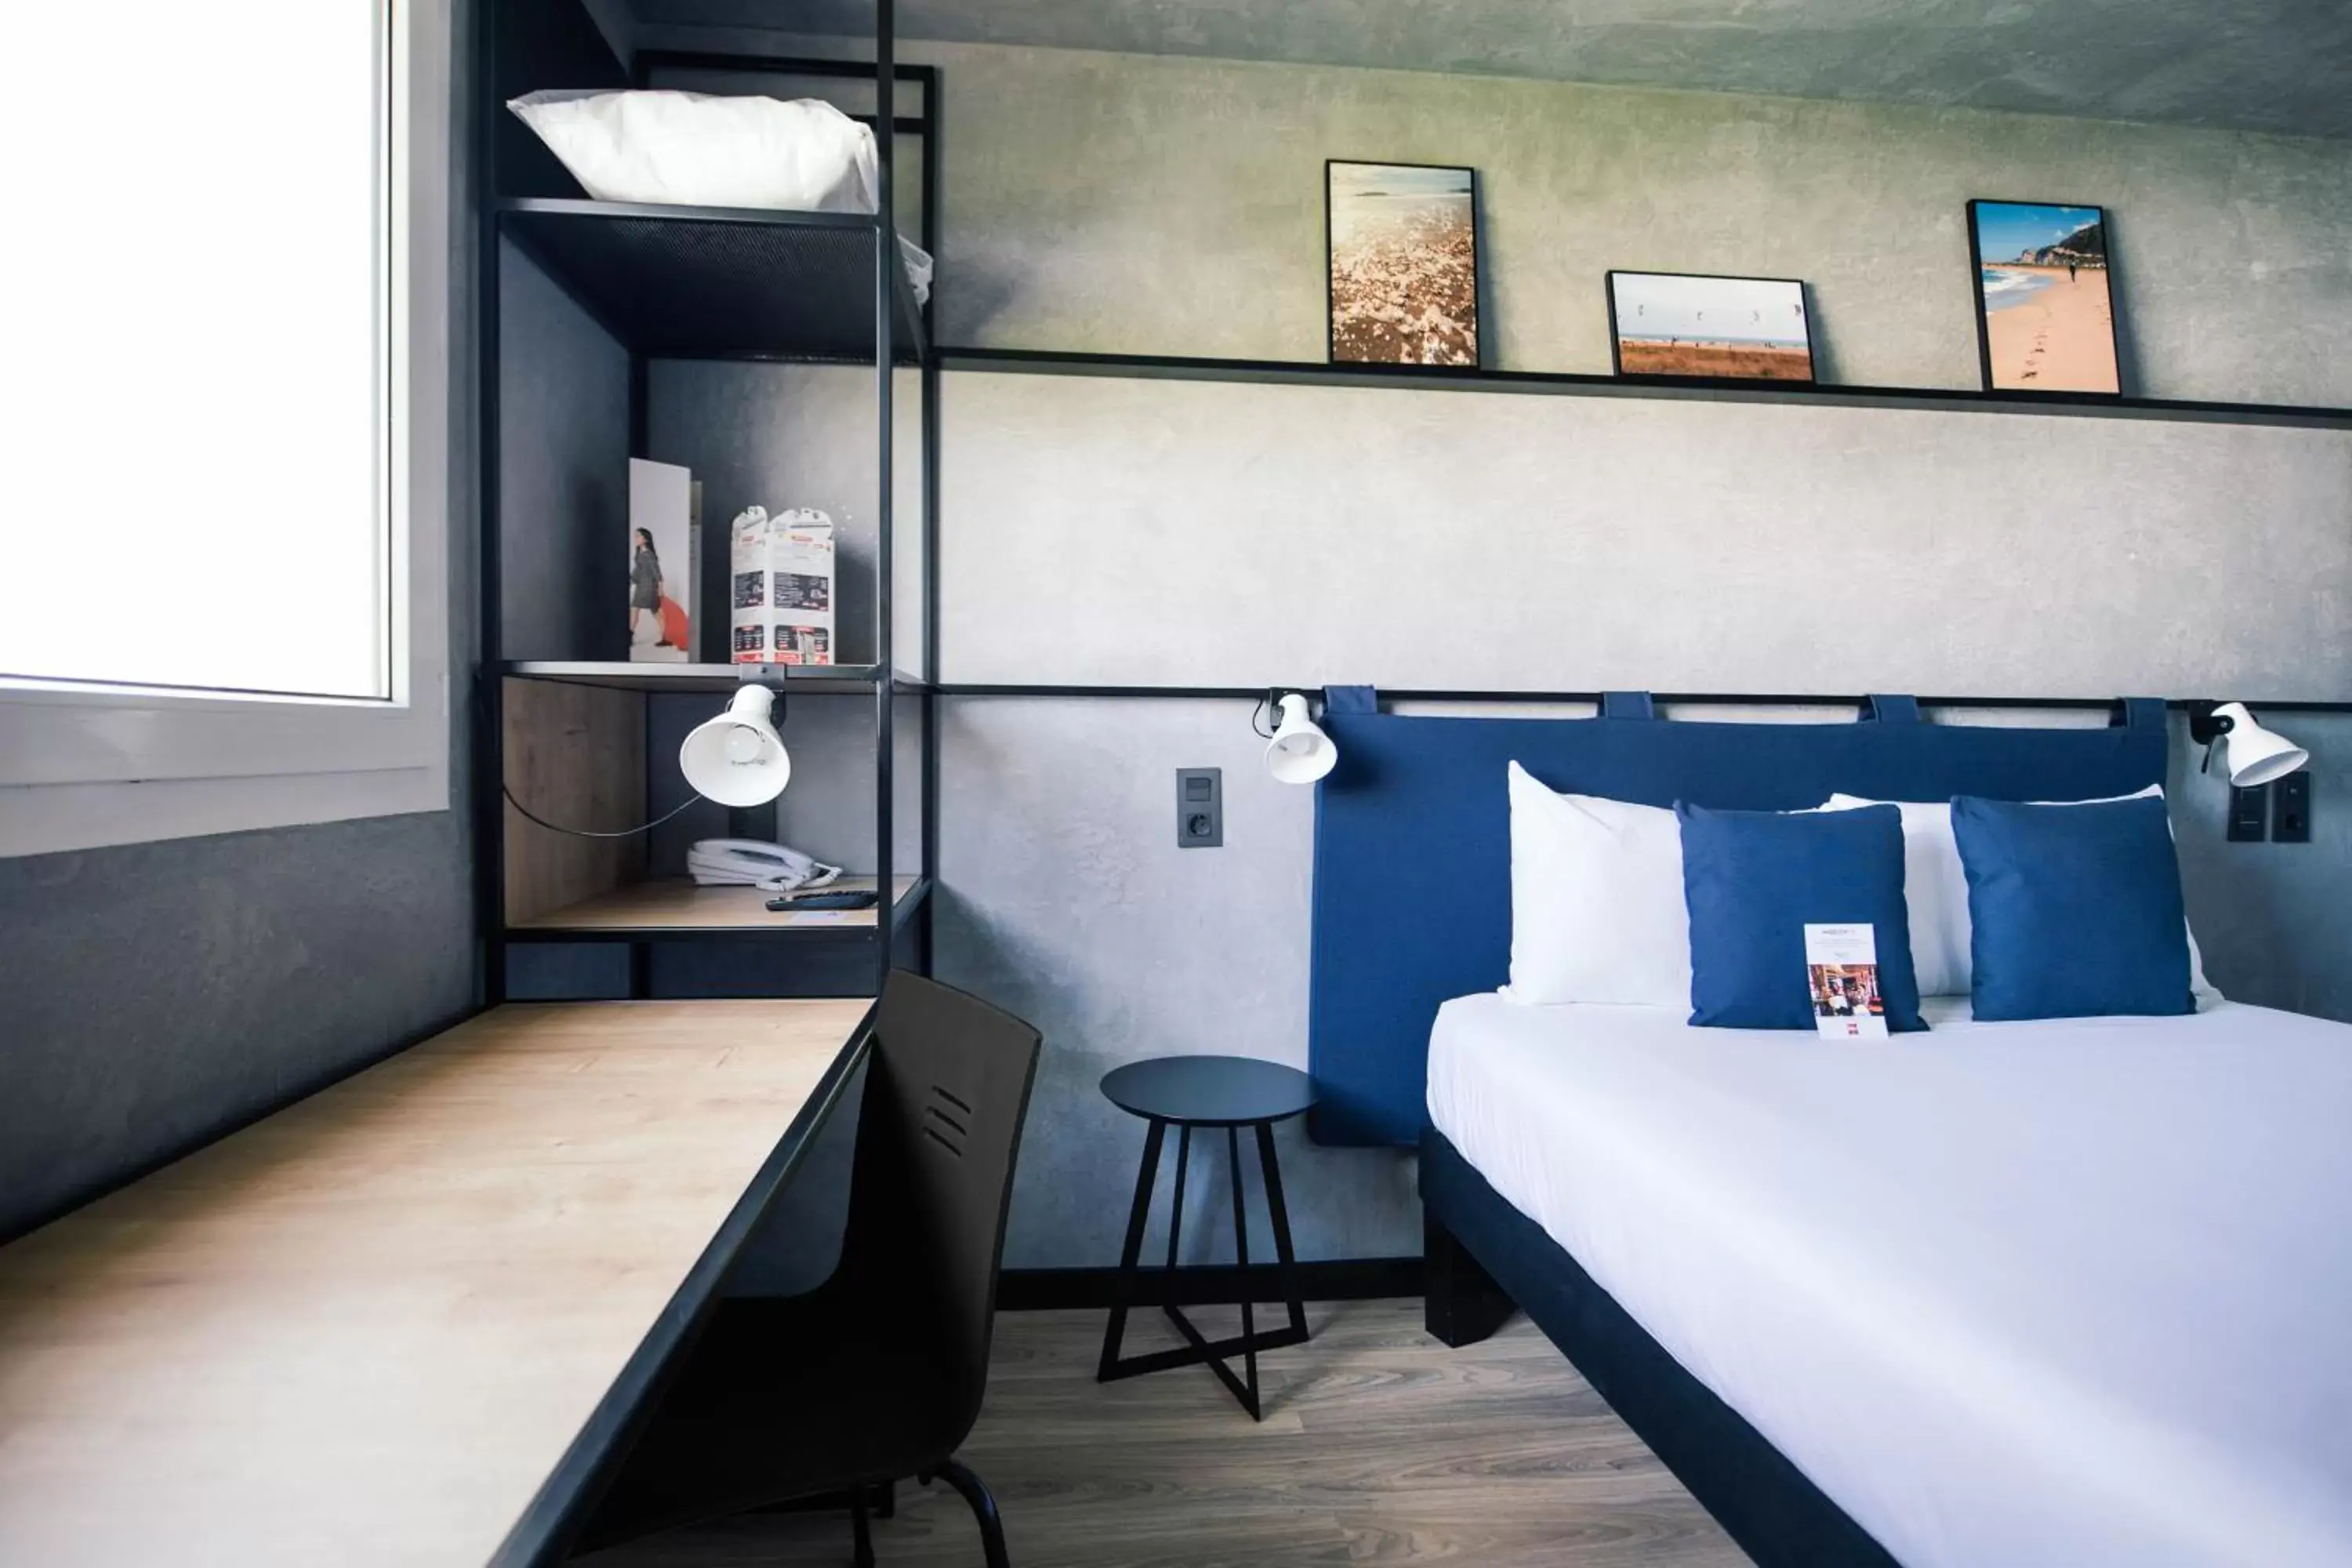 Bed in Ibis Hotel Alicante